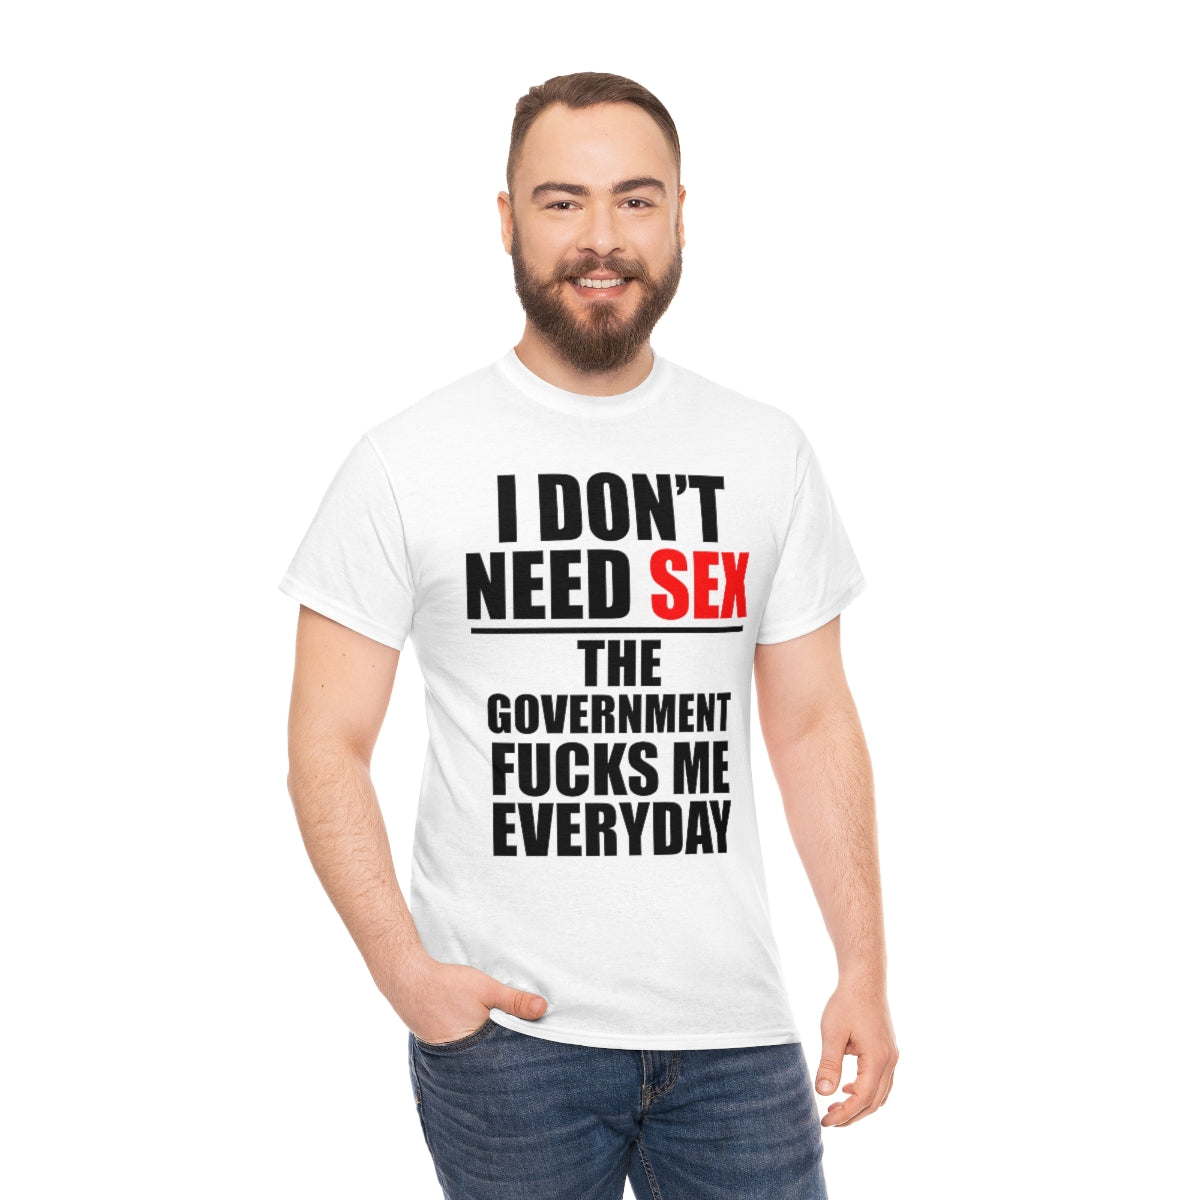 I DON'T NEED SEX T-SHIRT